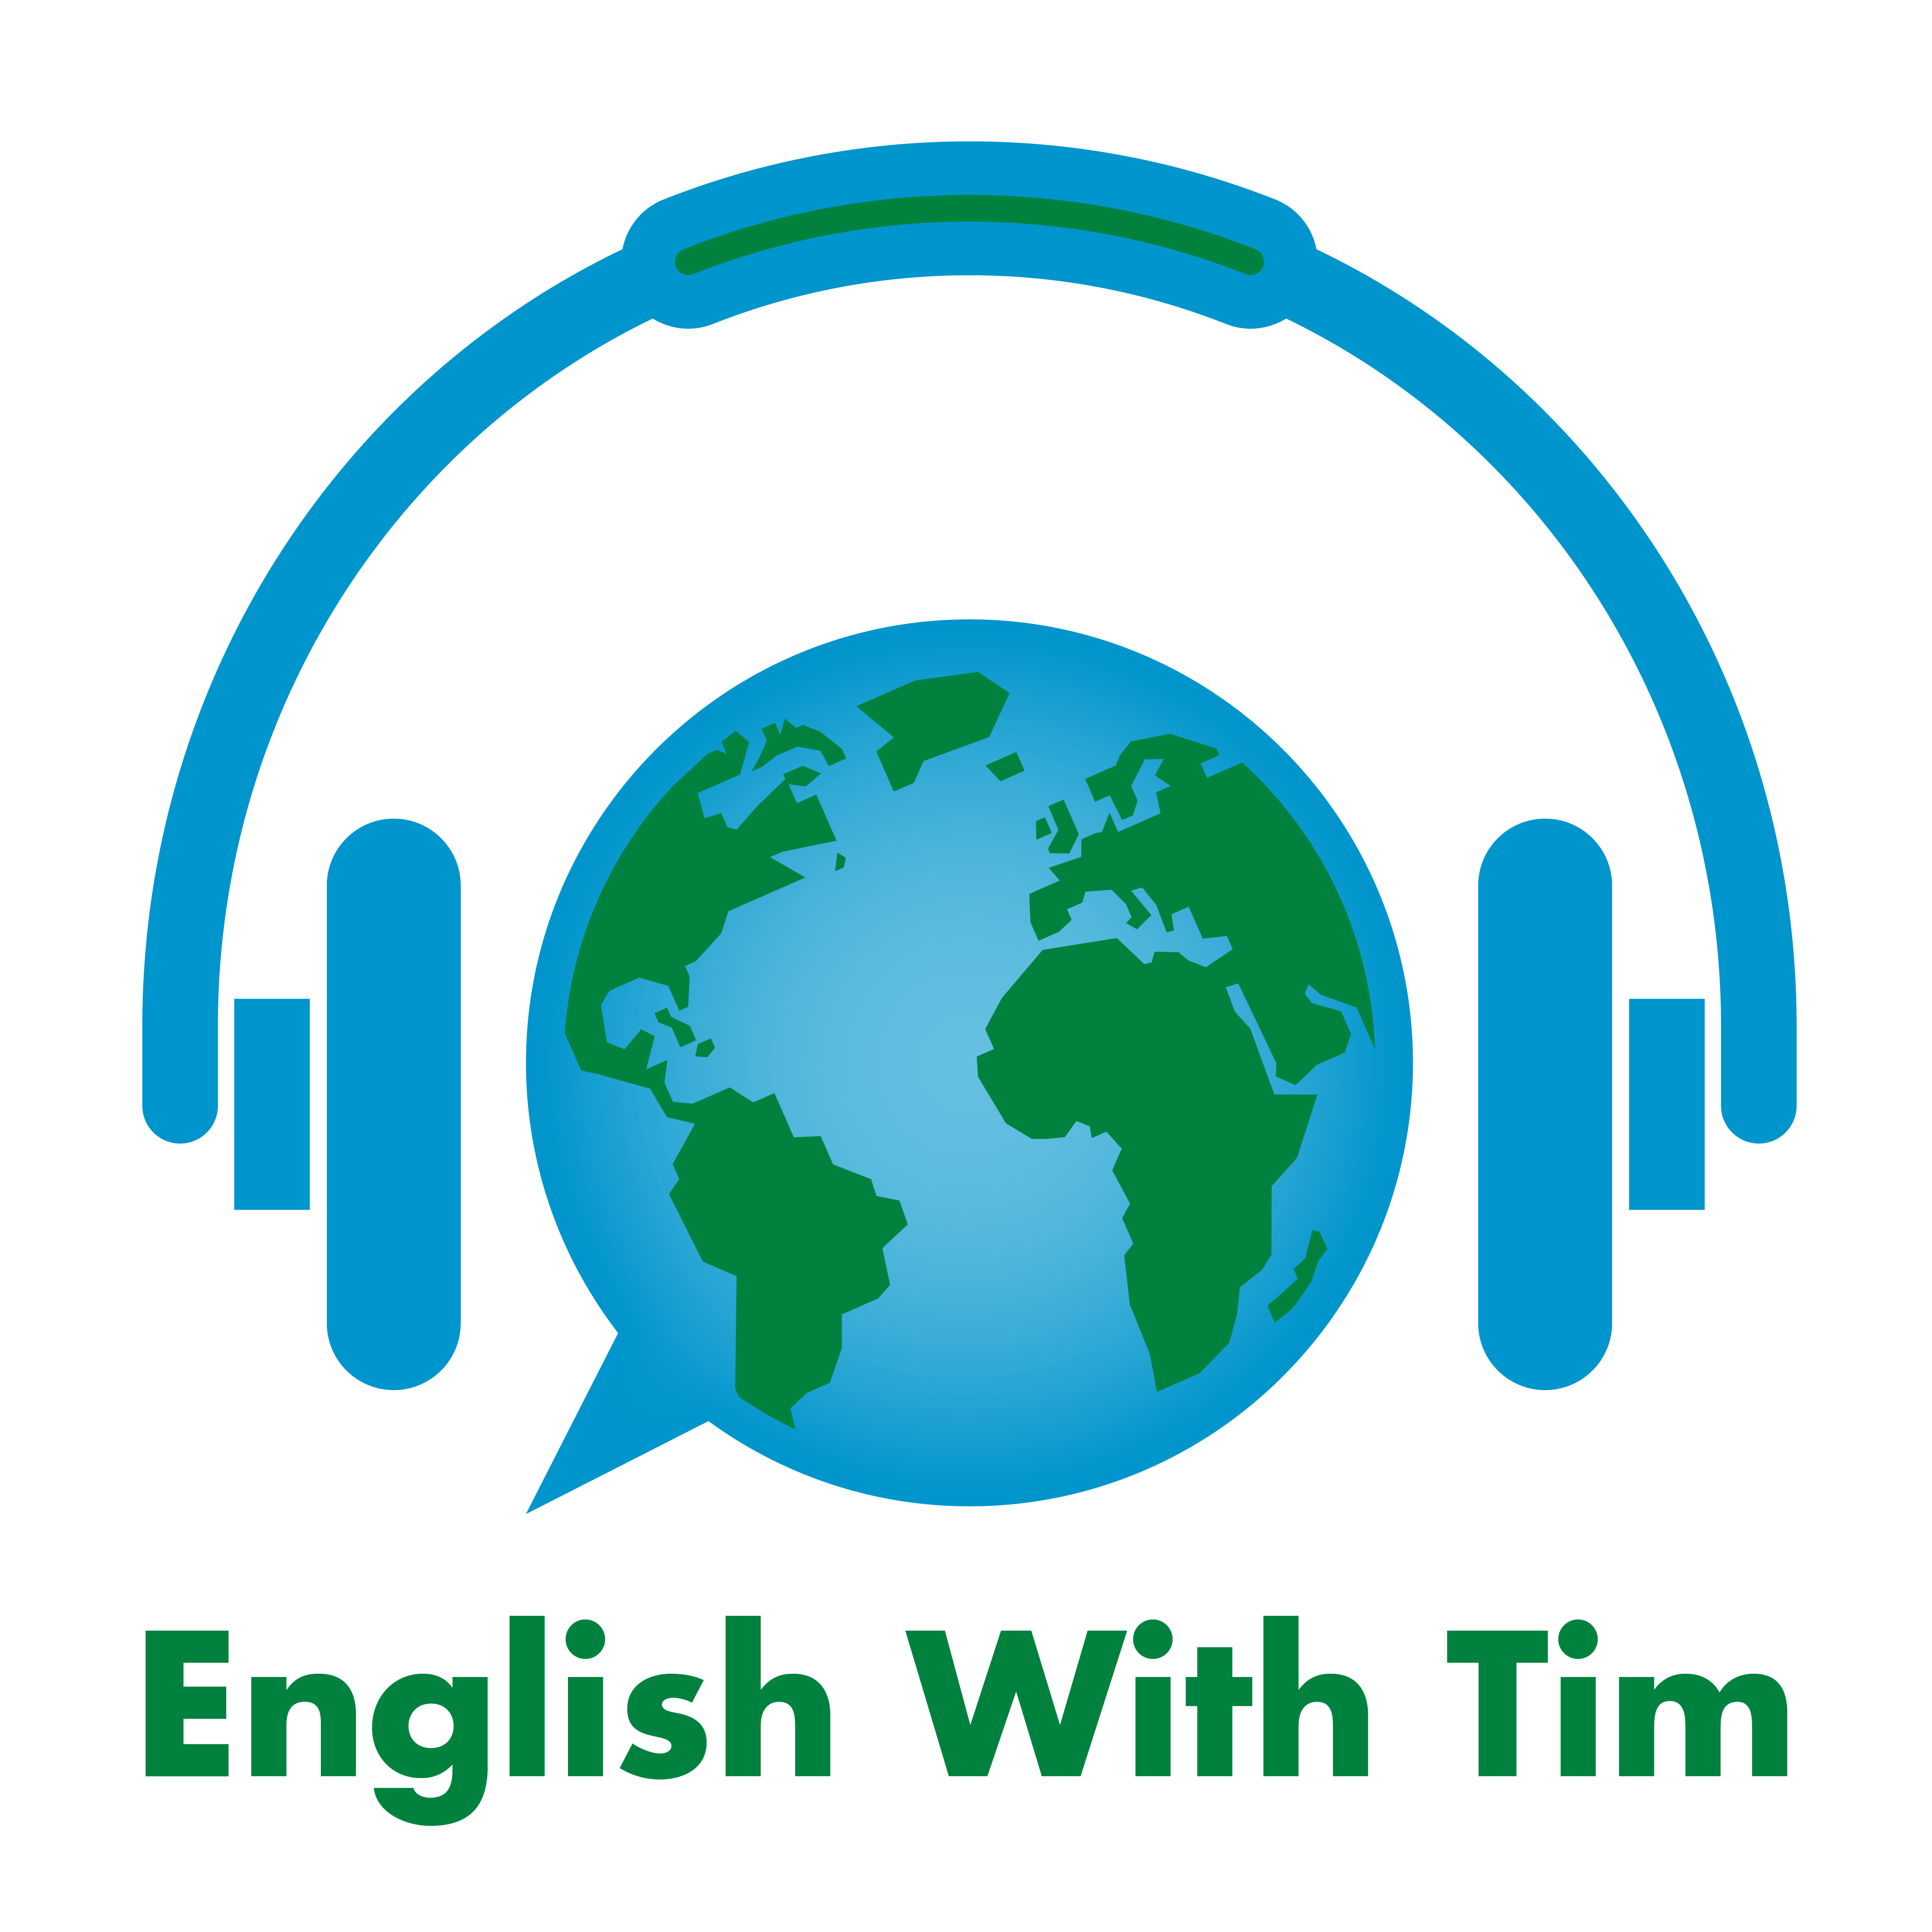 English with Tim